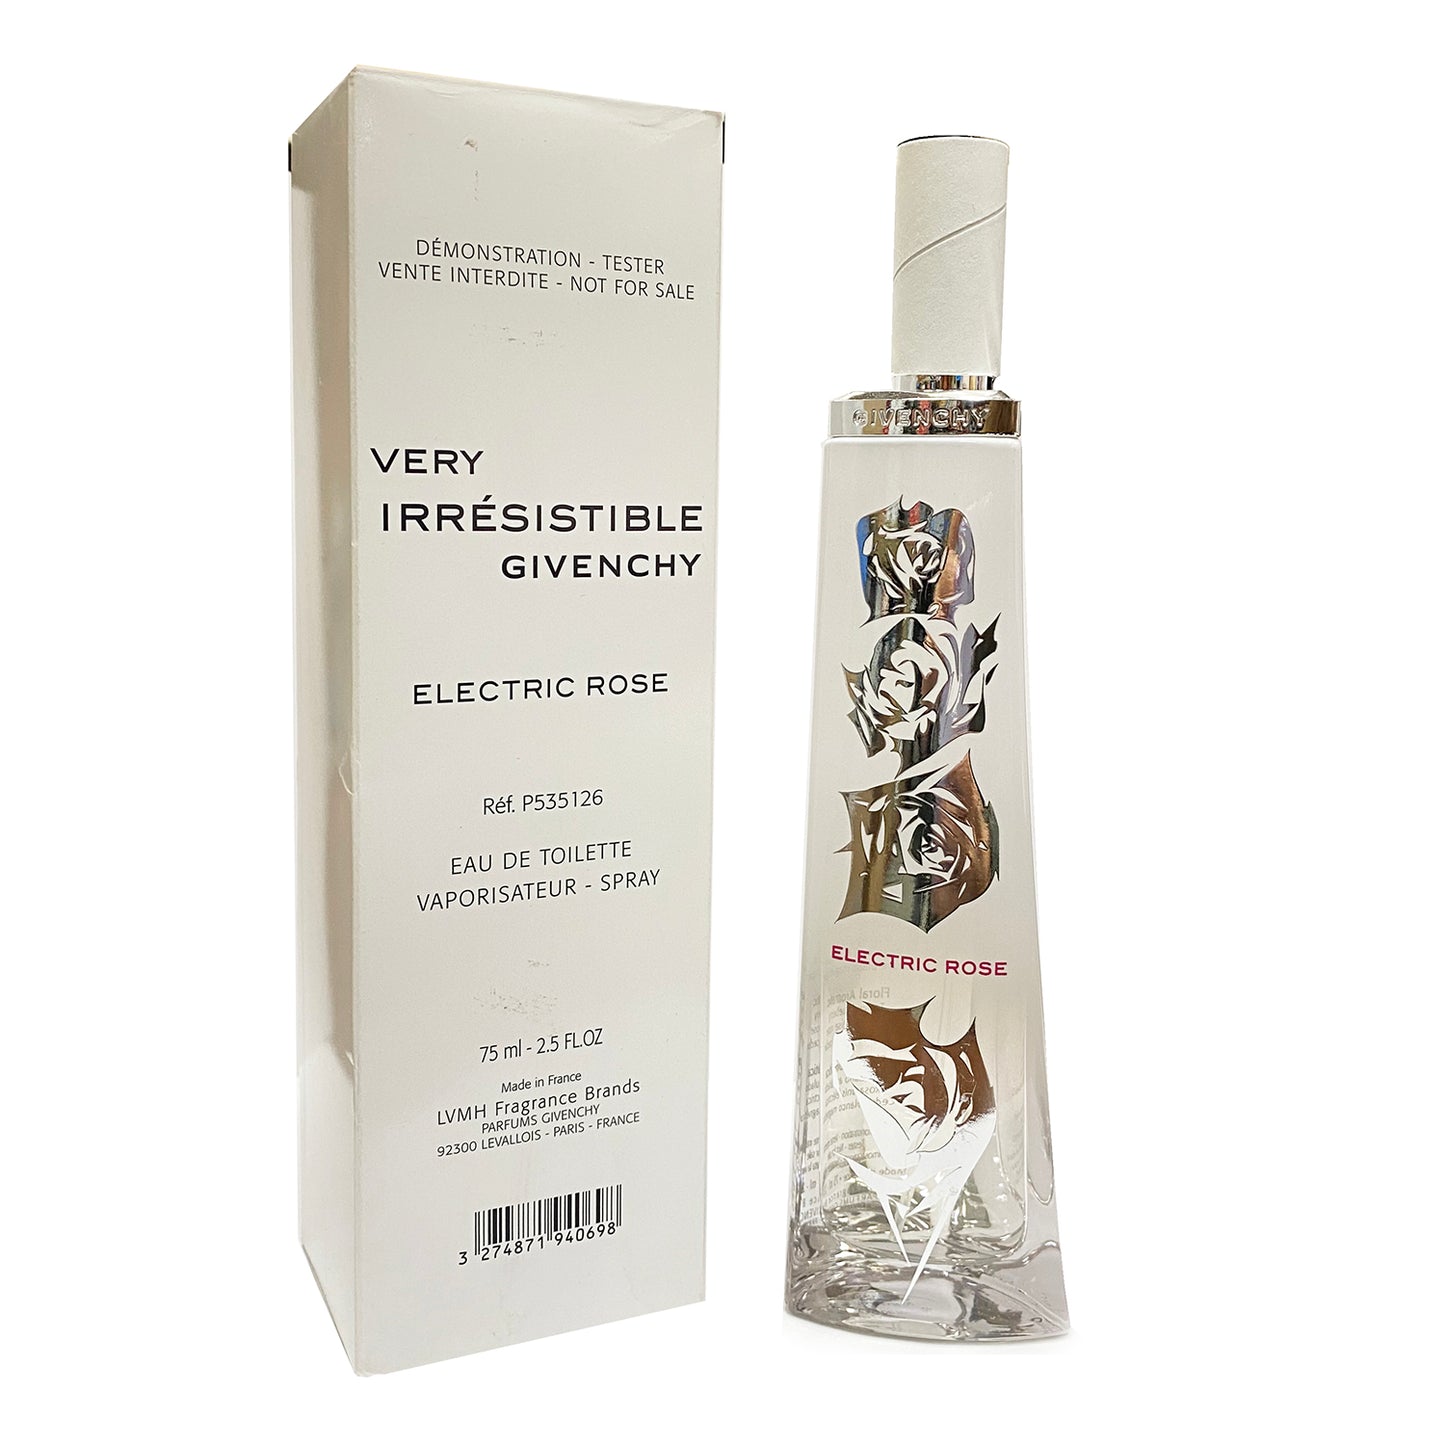 Very Irresistible by Givenchy Eau de Parfum Spray (Tester) 2.5 oz (women)